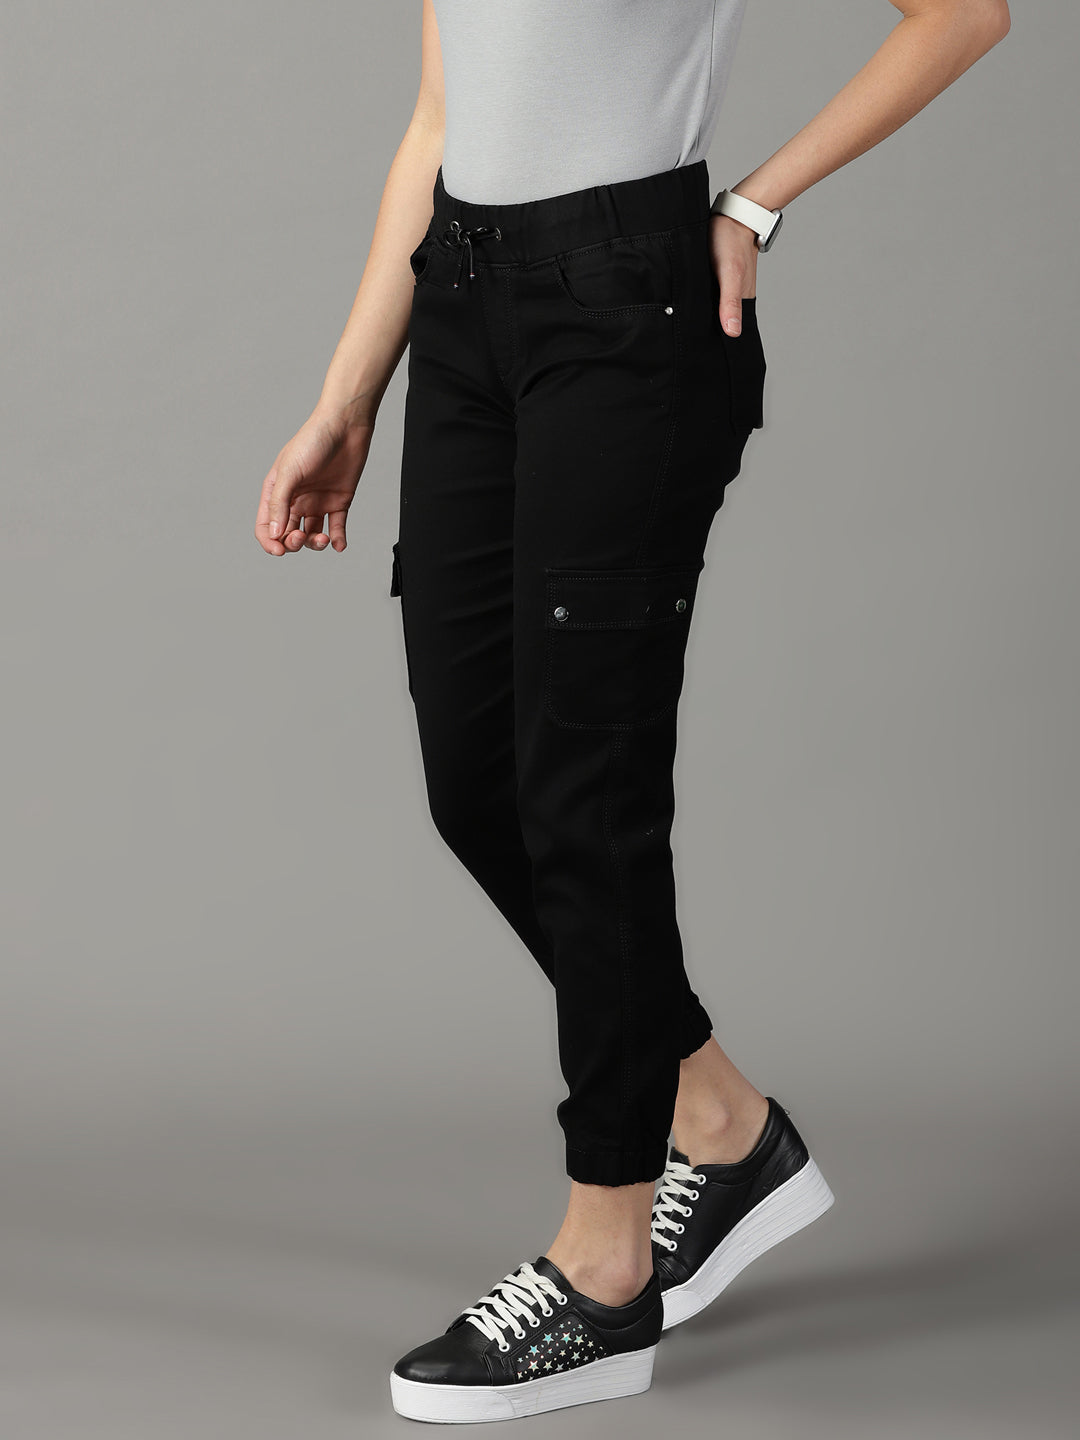 Women's Black Solid Jogger Denim Jeans